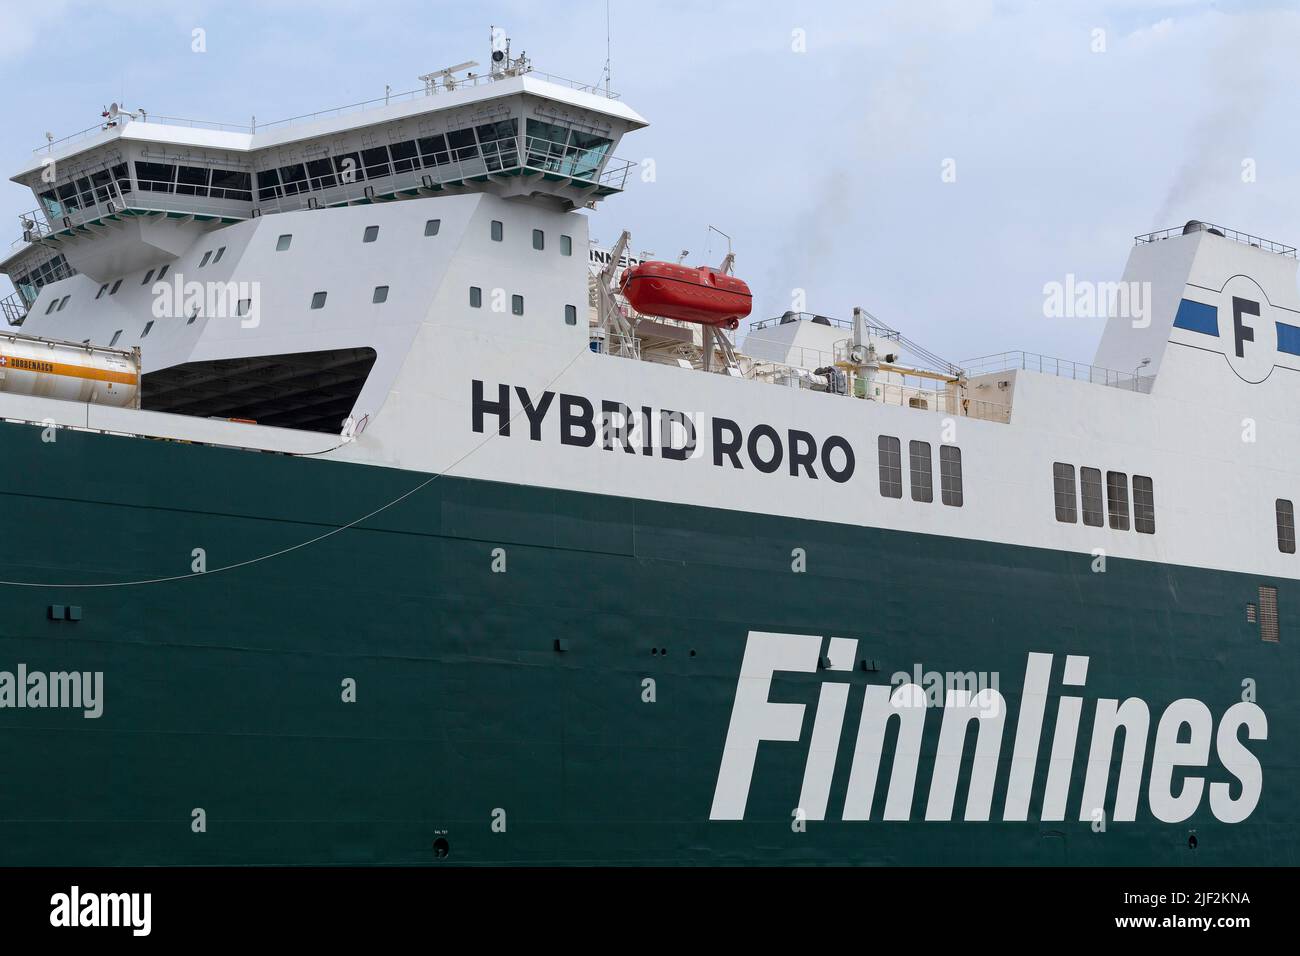 Finnlines Ferry Hybrid Roro arriving, Travemünde, Lübeck, Schleswig-Holstein, Germany Stock Photo